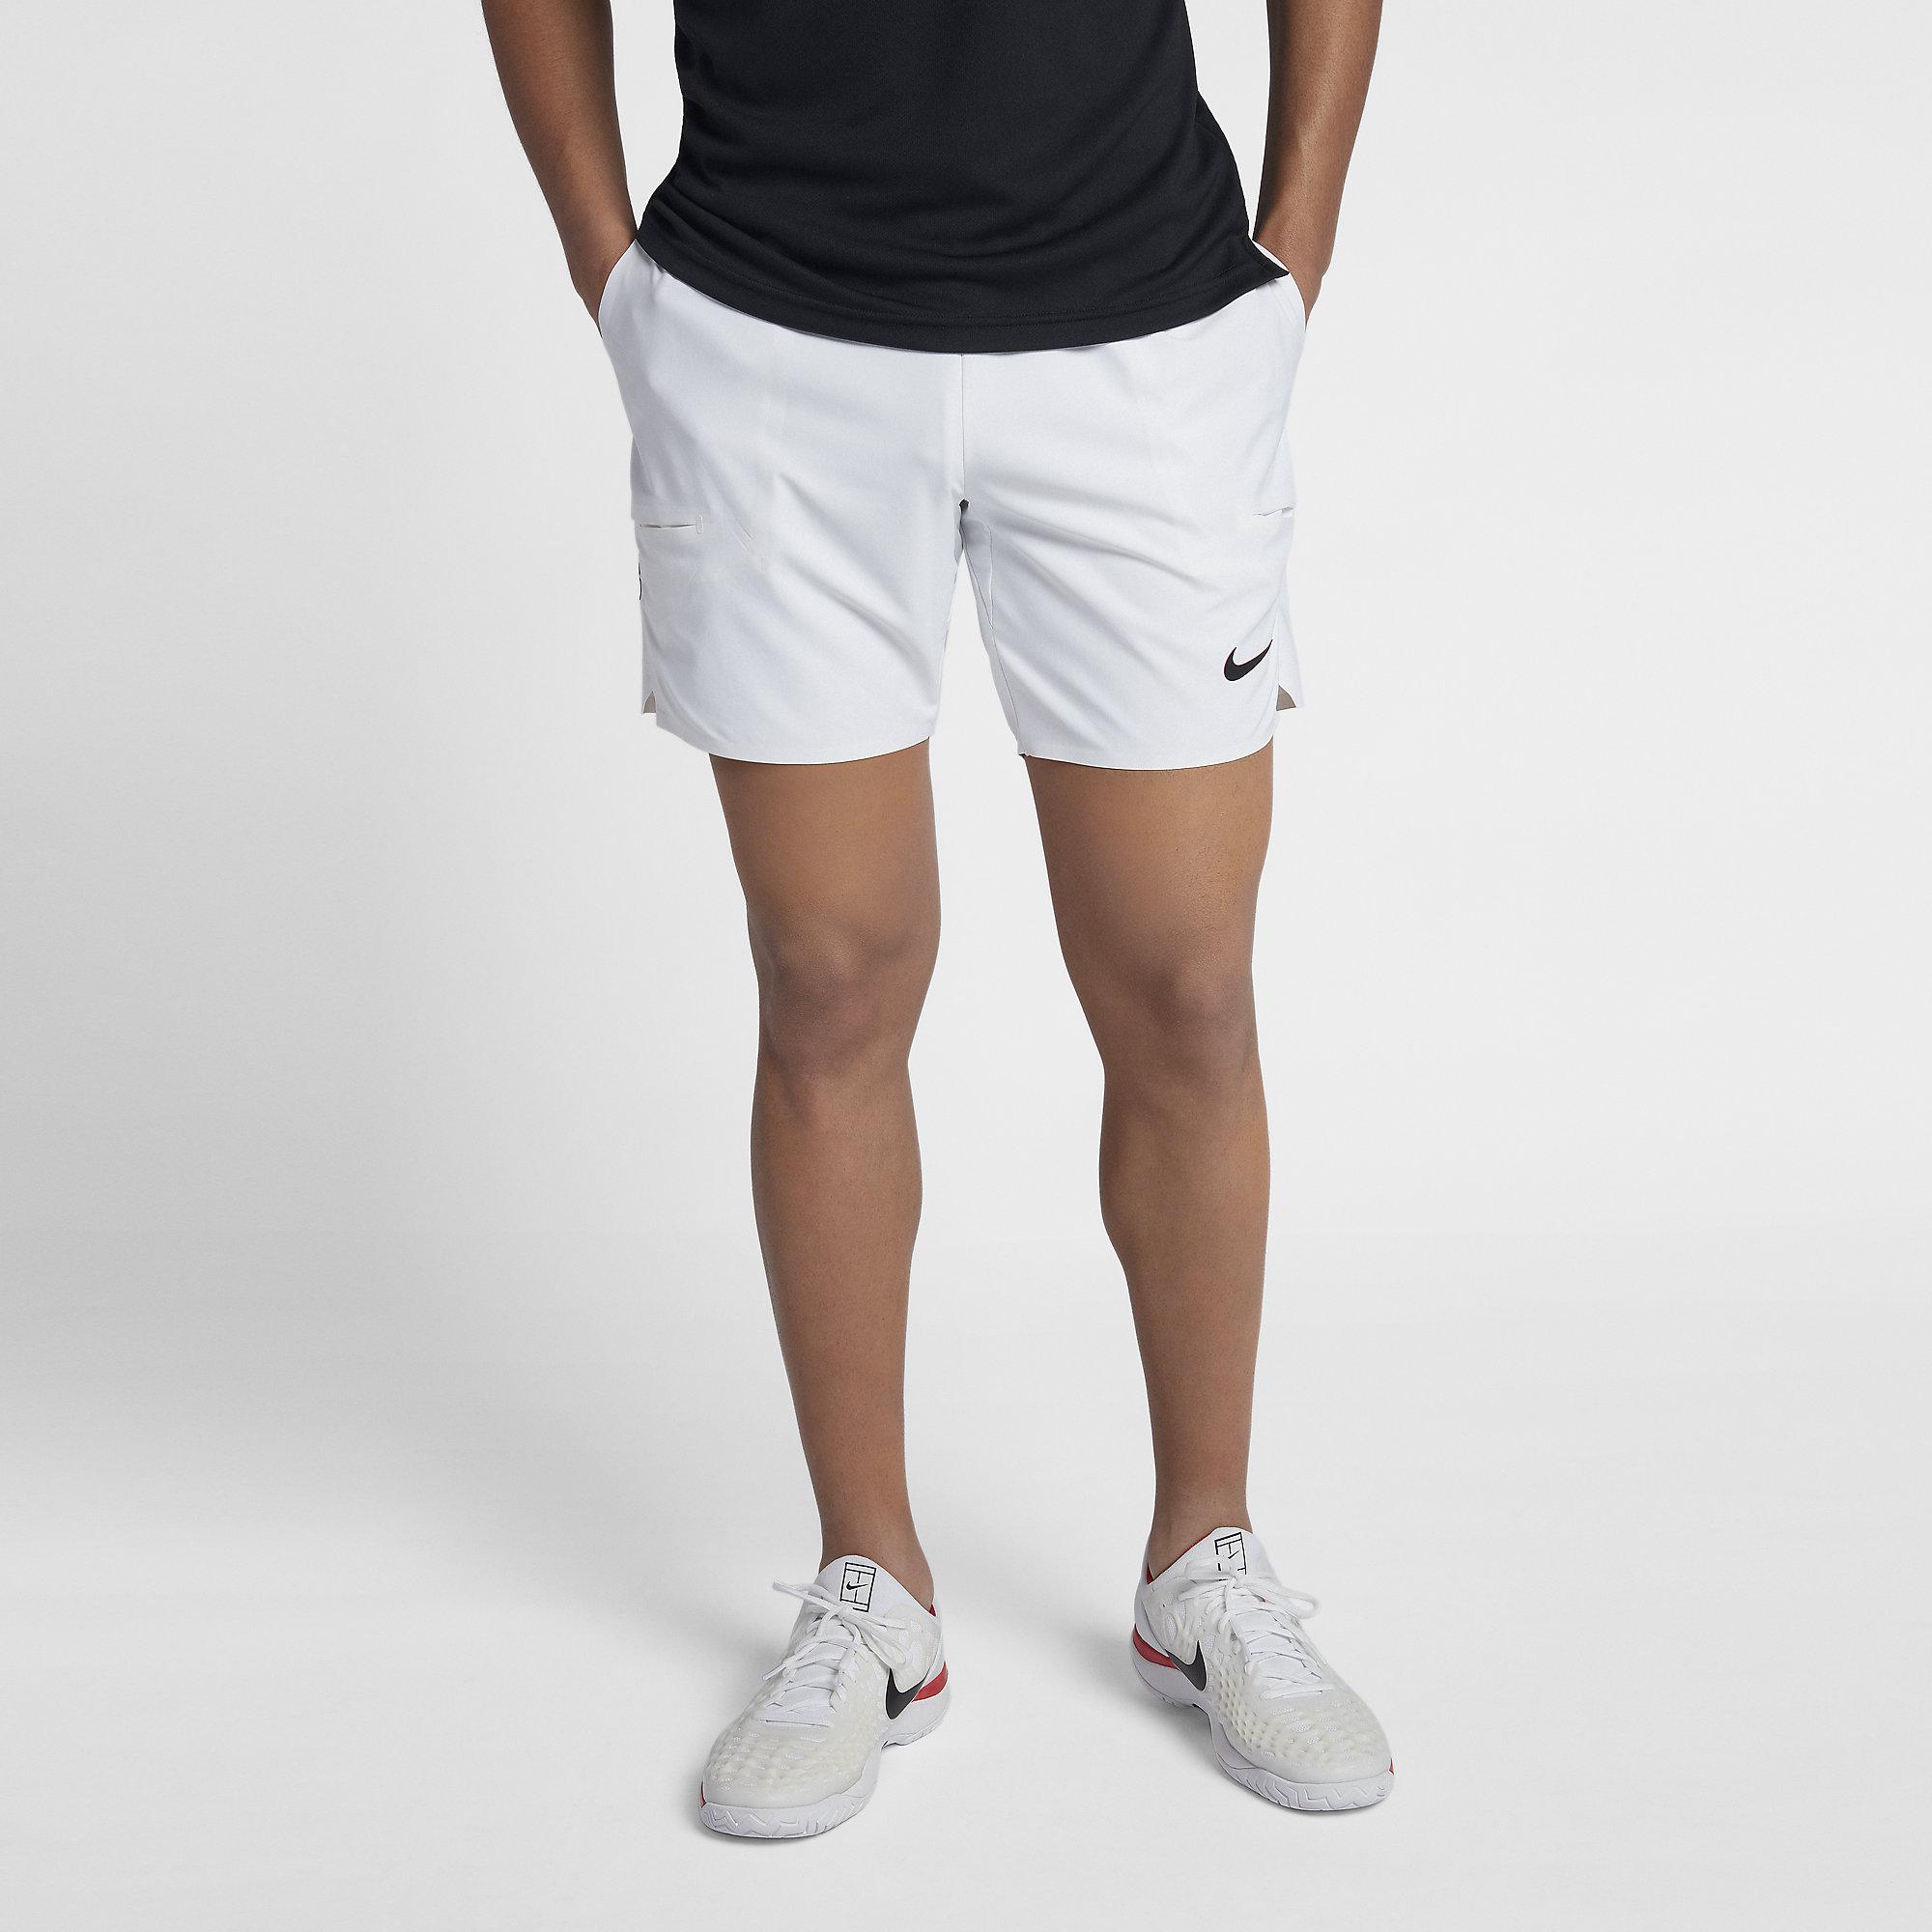 Nike Mens Court Flex Ace 7 Inch Shorts - White/Black - Tennisnuts.com